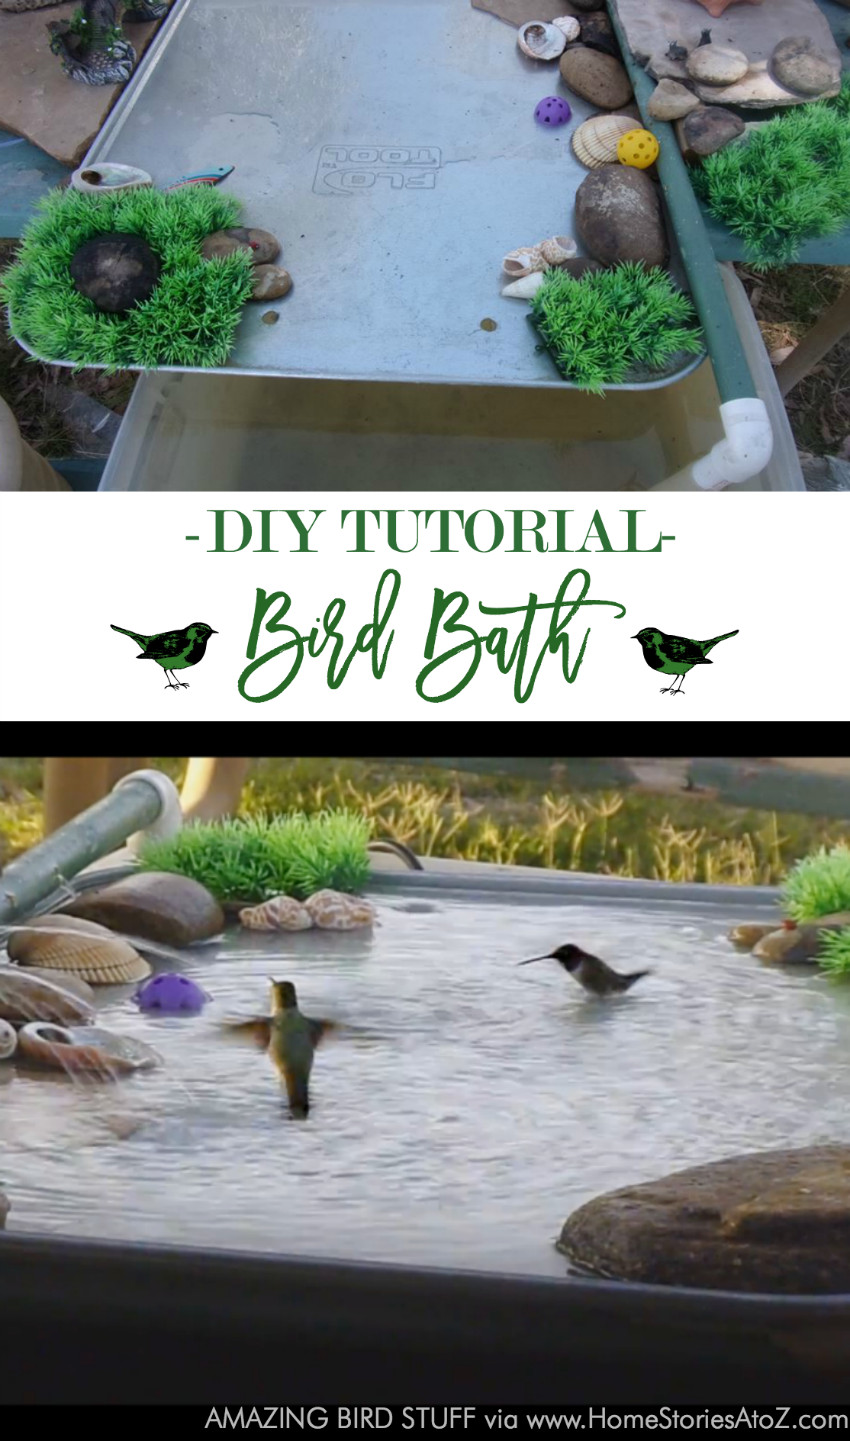 Best ideas about Bird Bath DIY
. Save or Pin DIY Garden Planter & Birds Bath Now.